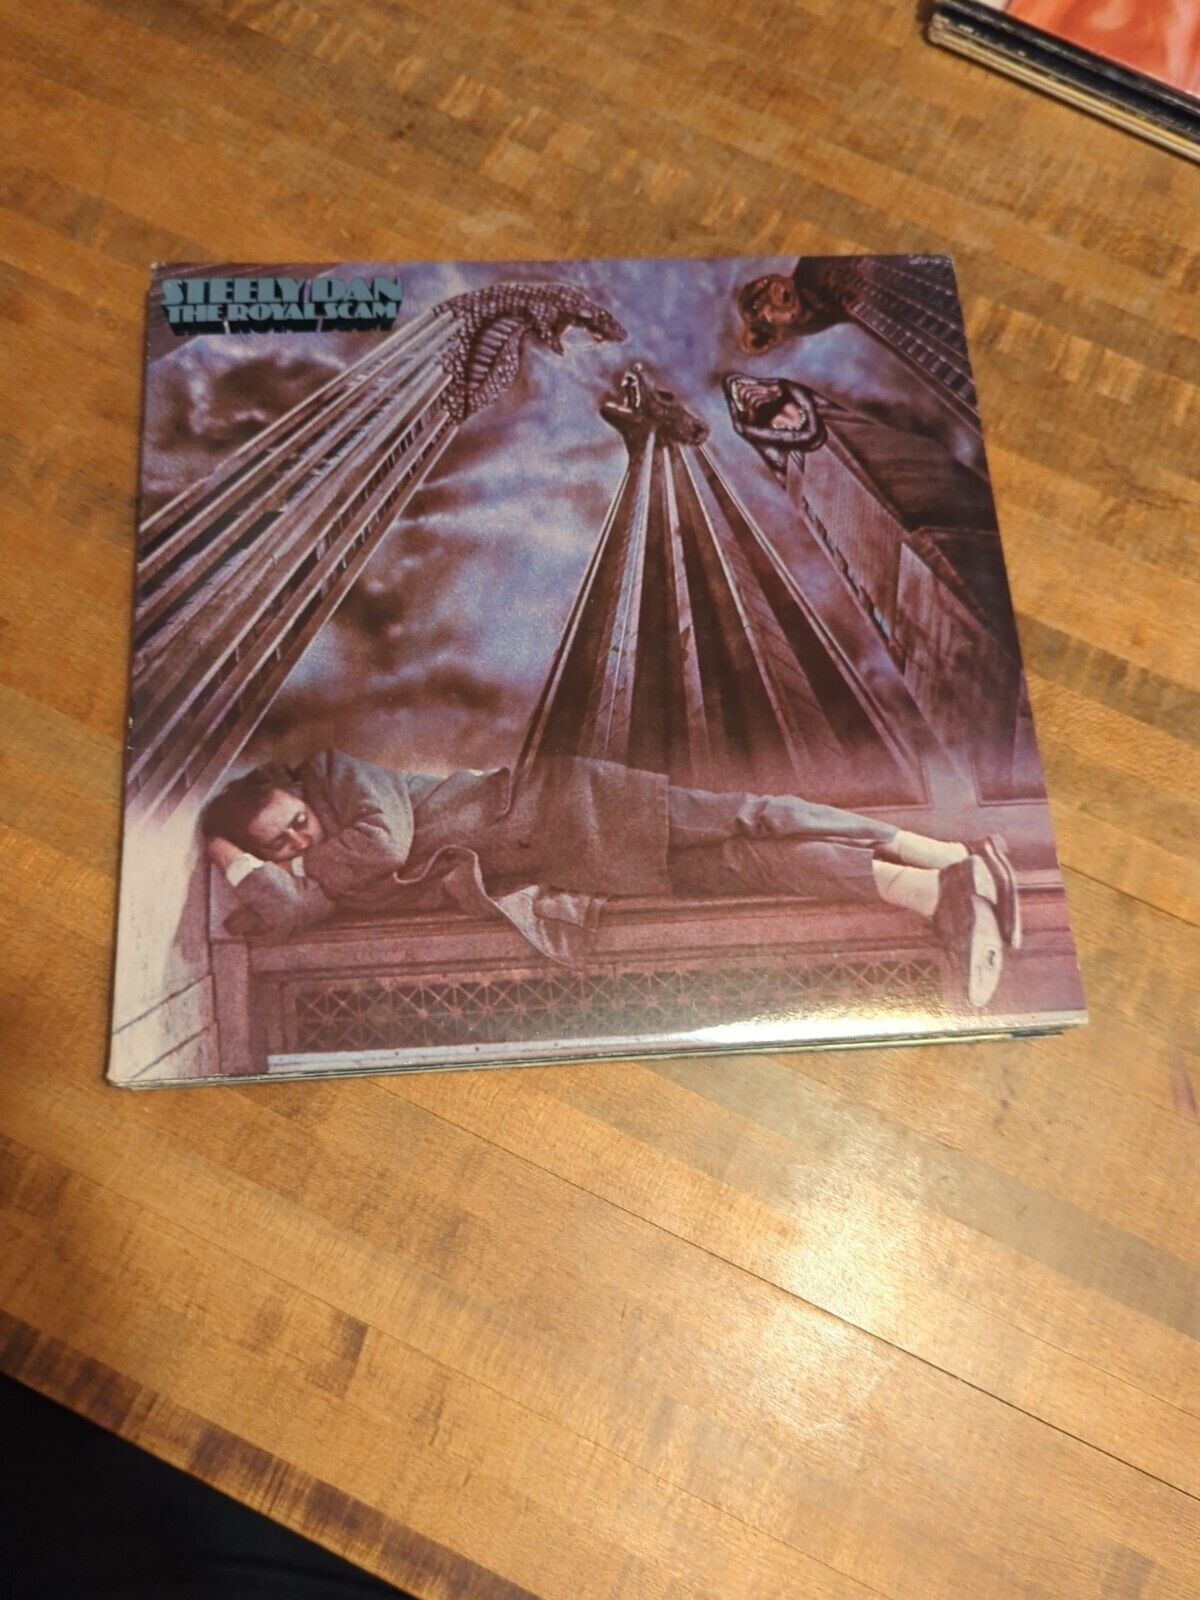 Steely Dan – The Royal Scam Original Vinyl Record LP Album ABCD-931 1976